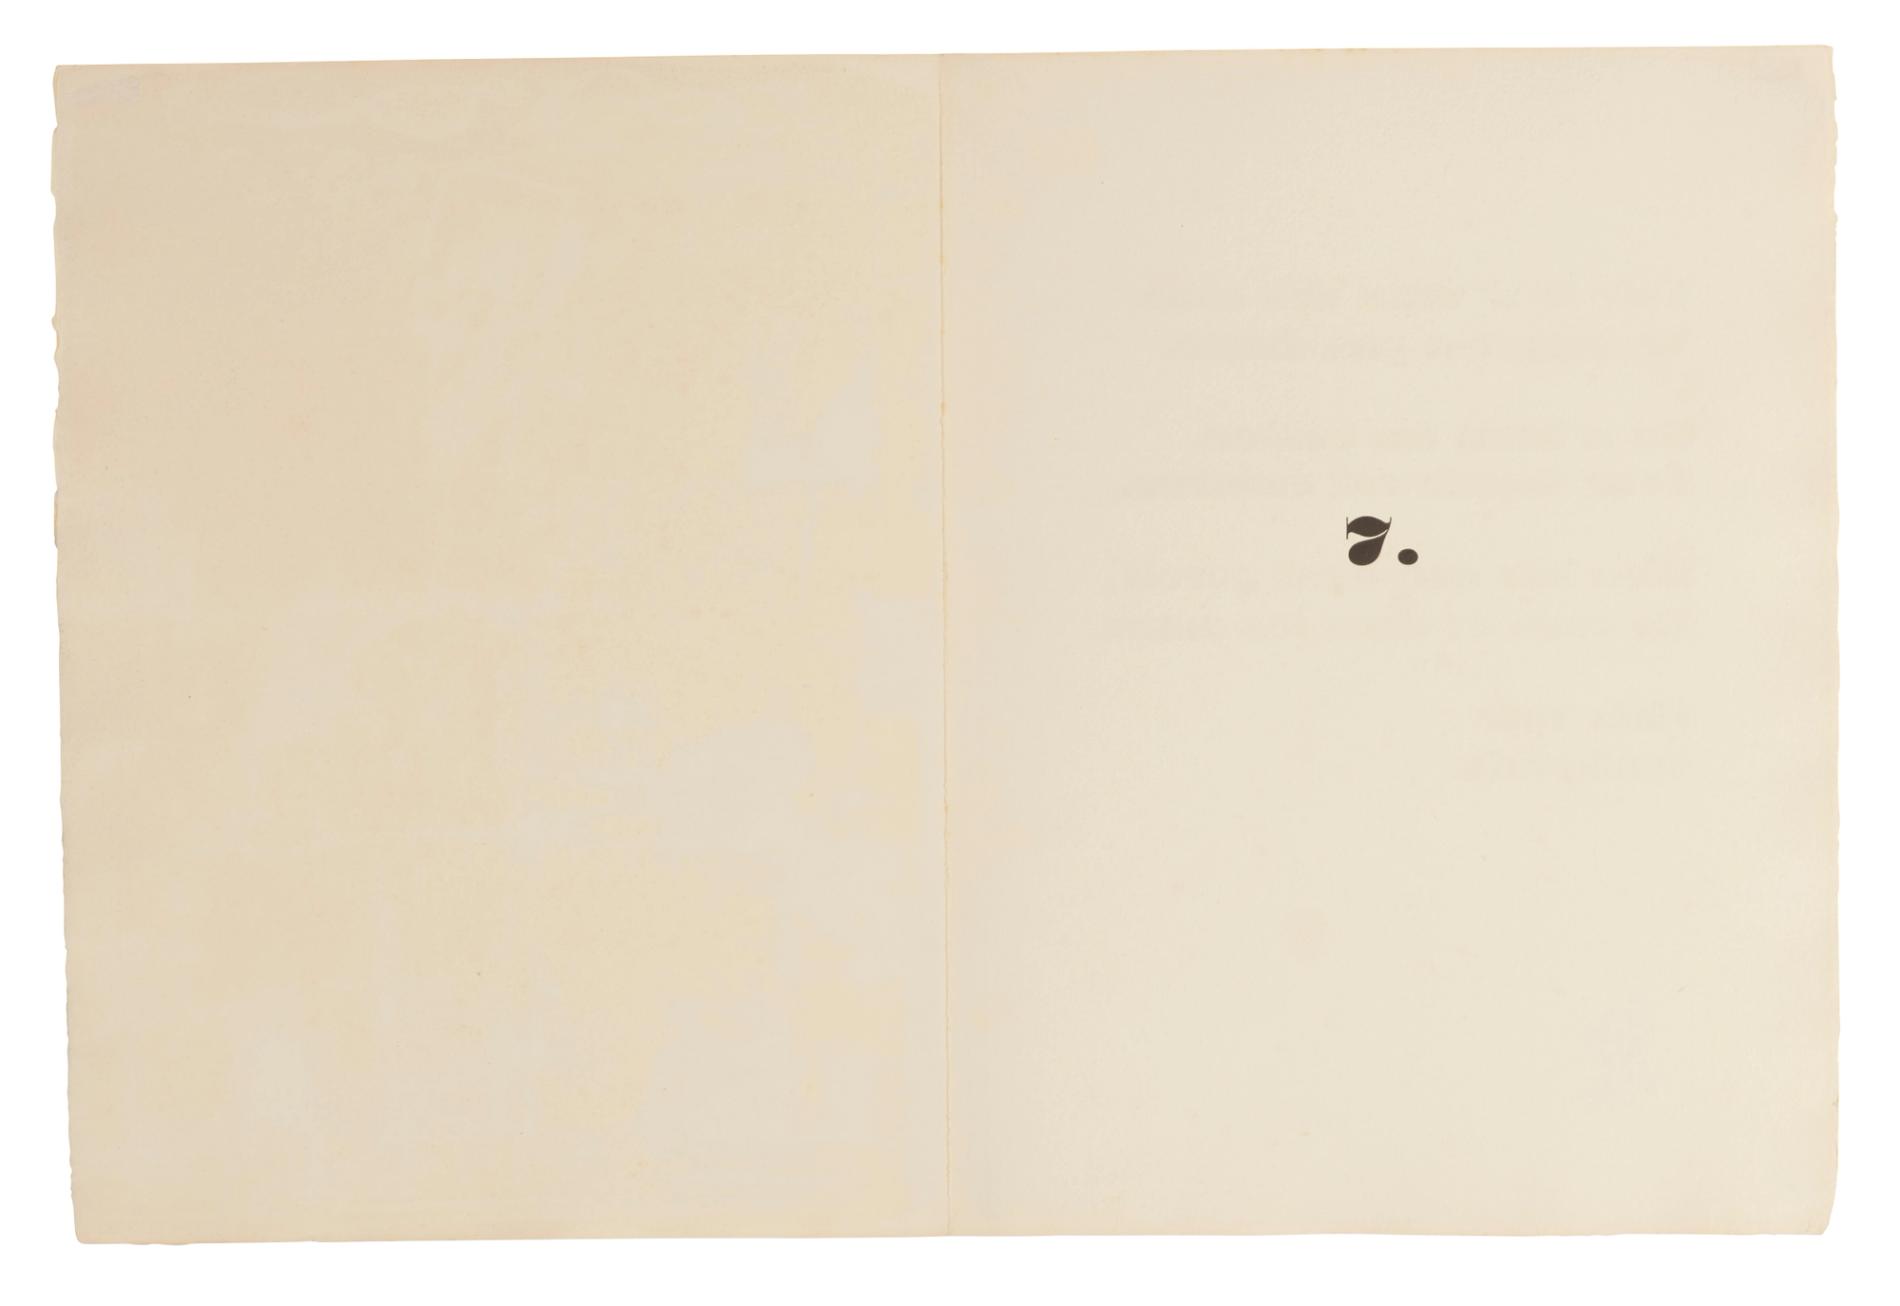 Jean Dubuffet, "Homme et Mur" Lithograph no.7/192, 1950